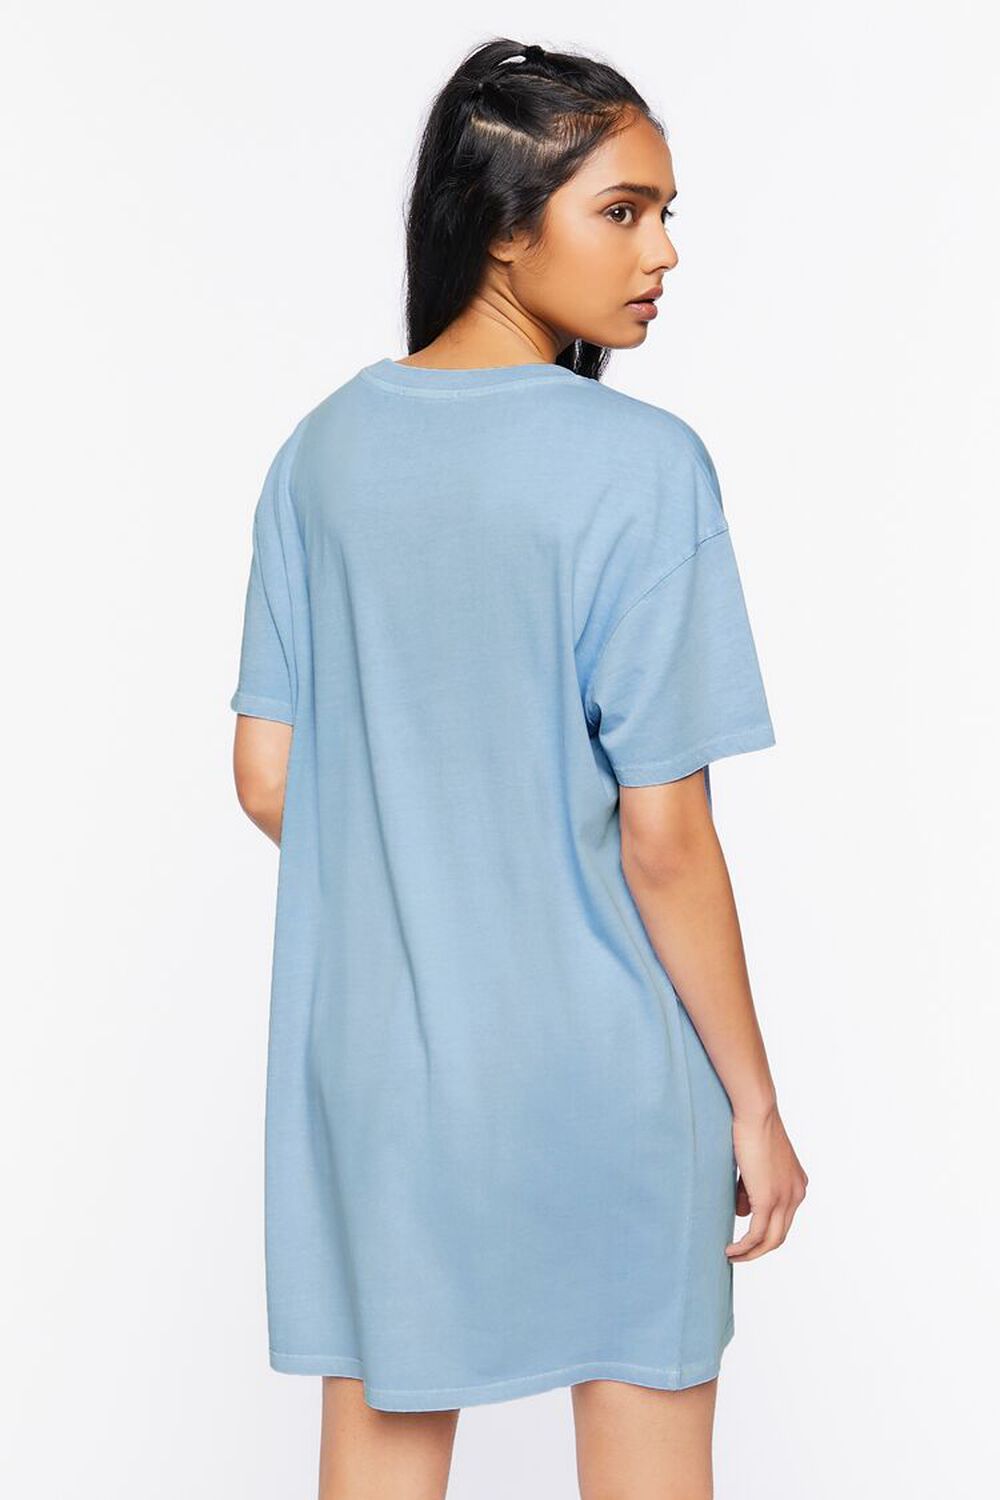 BLUE/MULTI Joshua Tree Graphic T-Shirt Dress, image 3